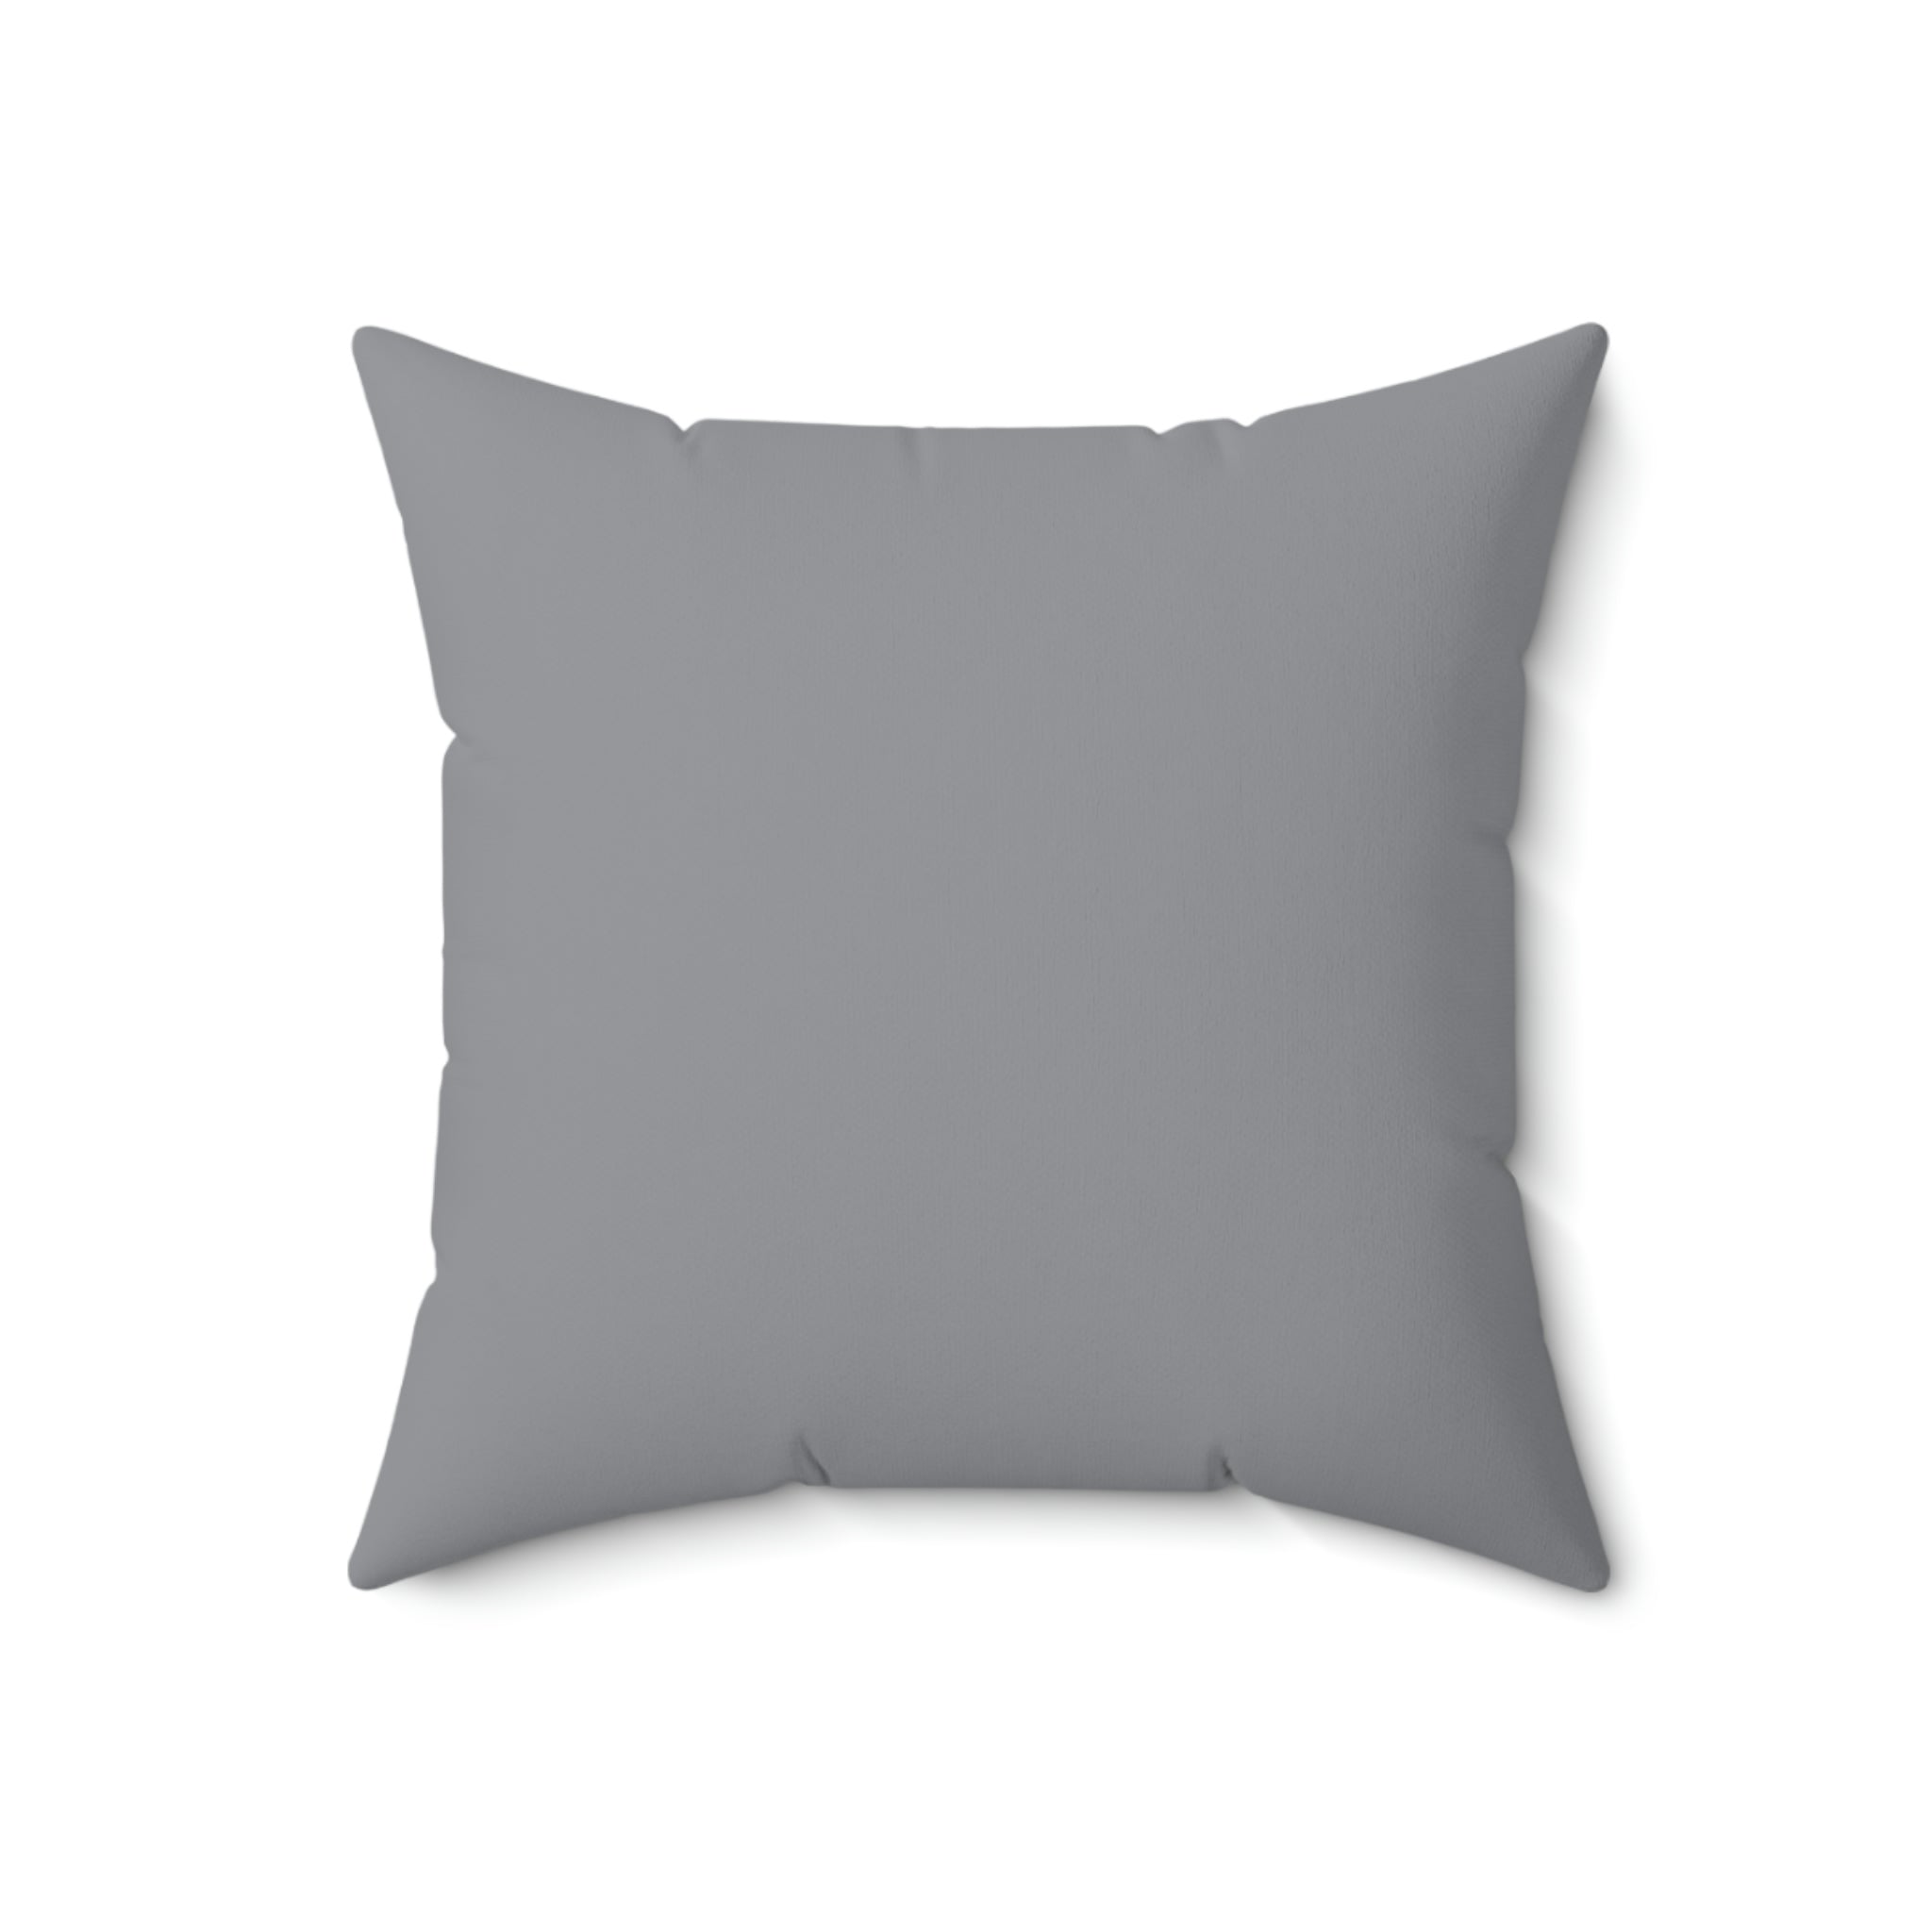 Spun Polyester Pillow Happy Face off white/grey